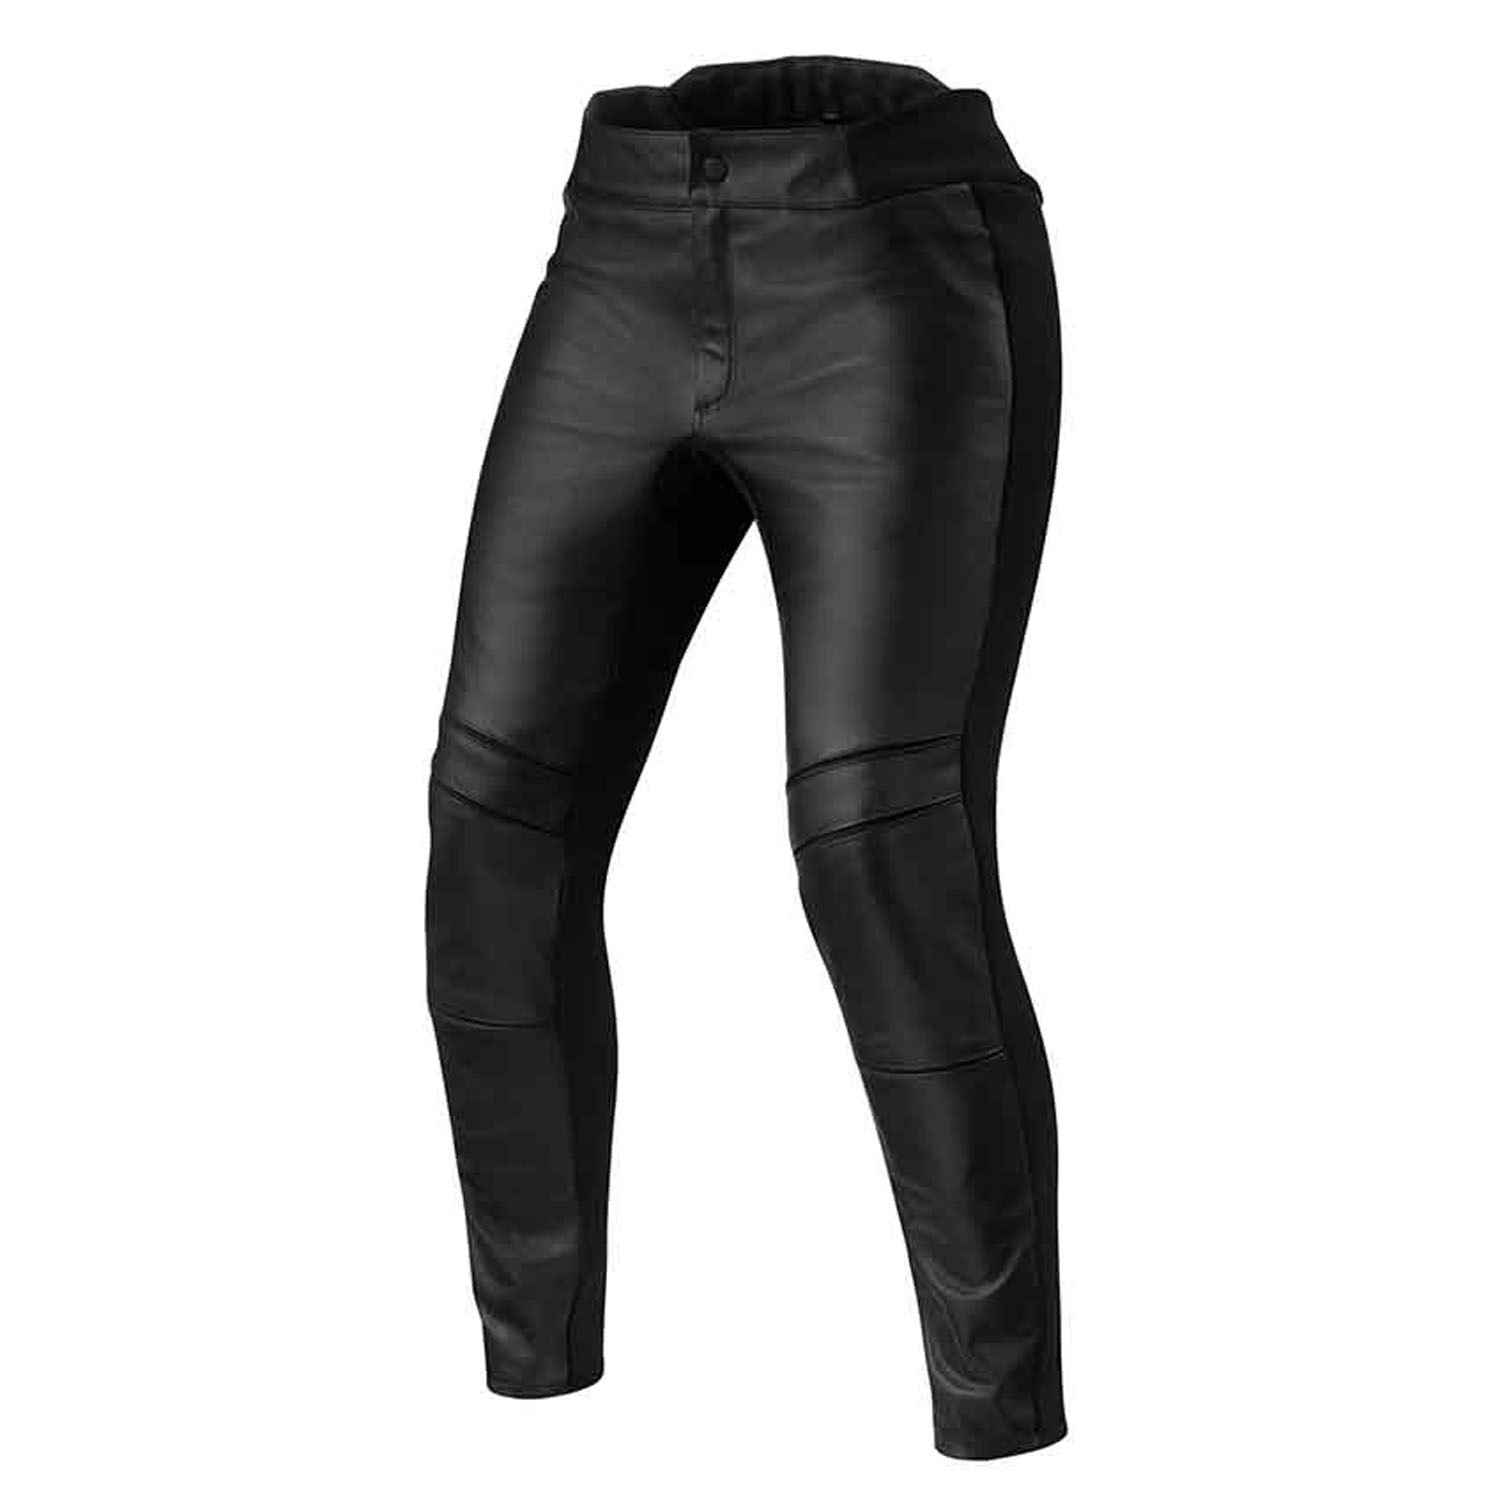 Image of EU REV'IT! Maci Ladies Black Long Motorcycle Pants Taille 38